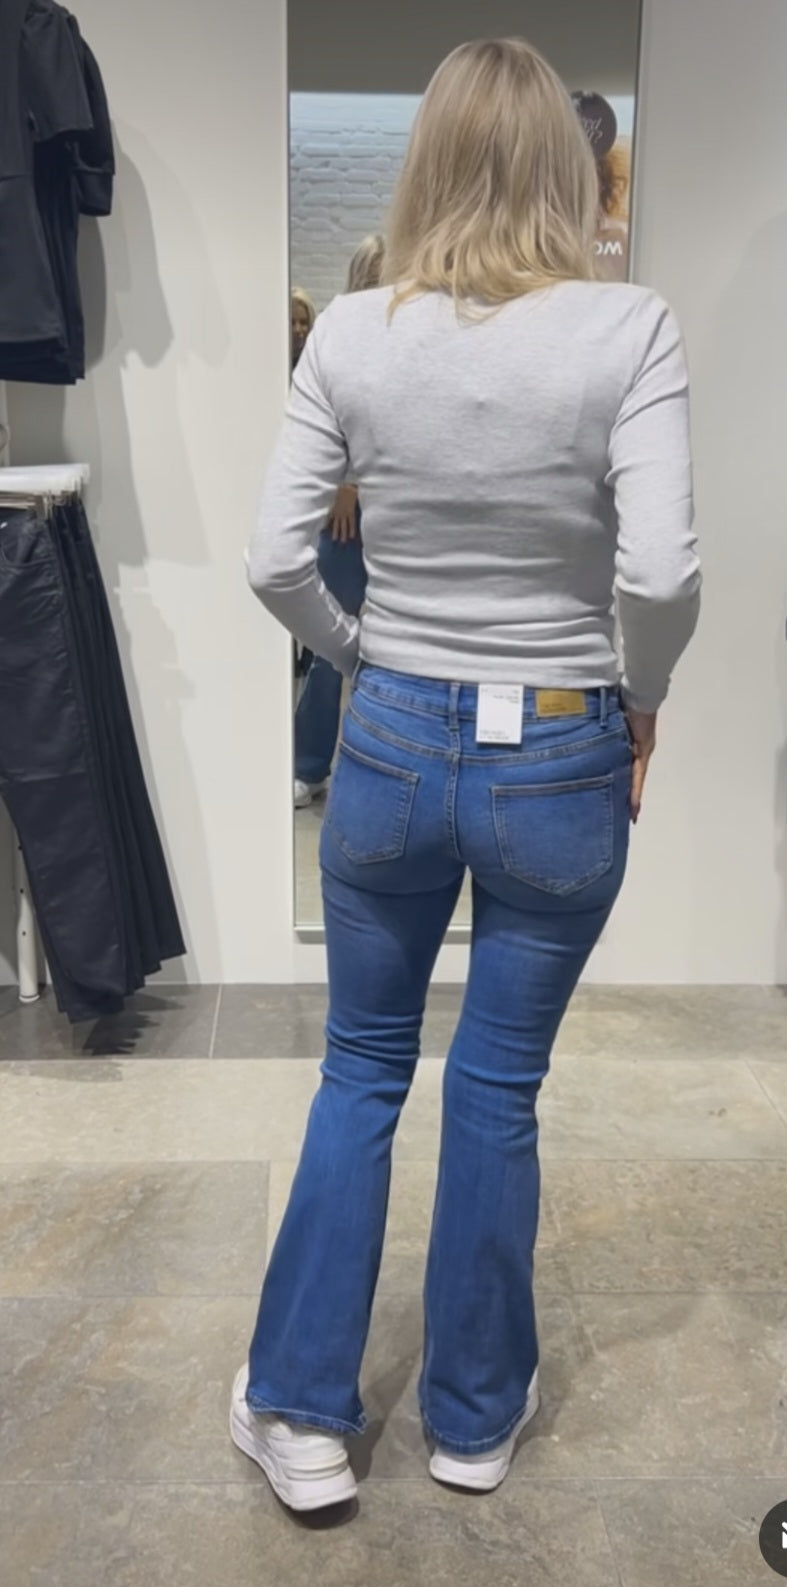 VMSIGI Jeans - Medium Blue Denim